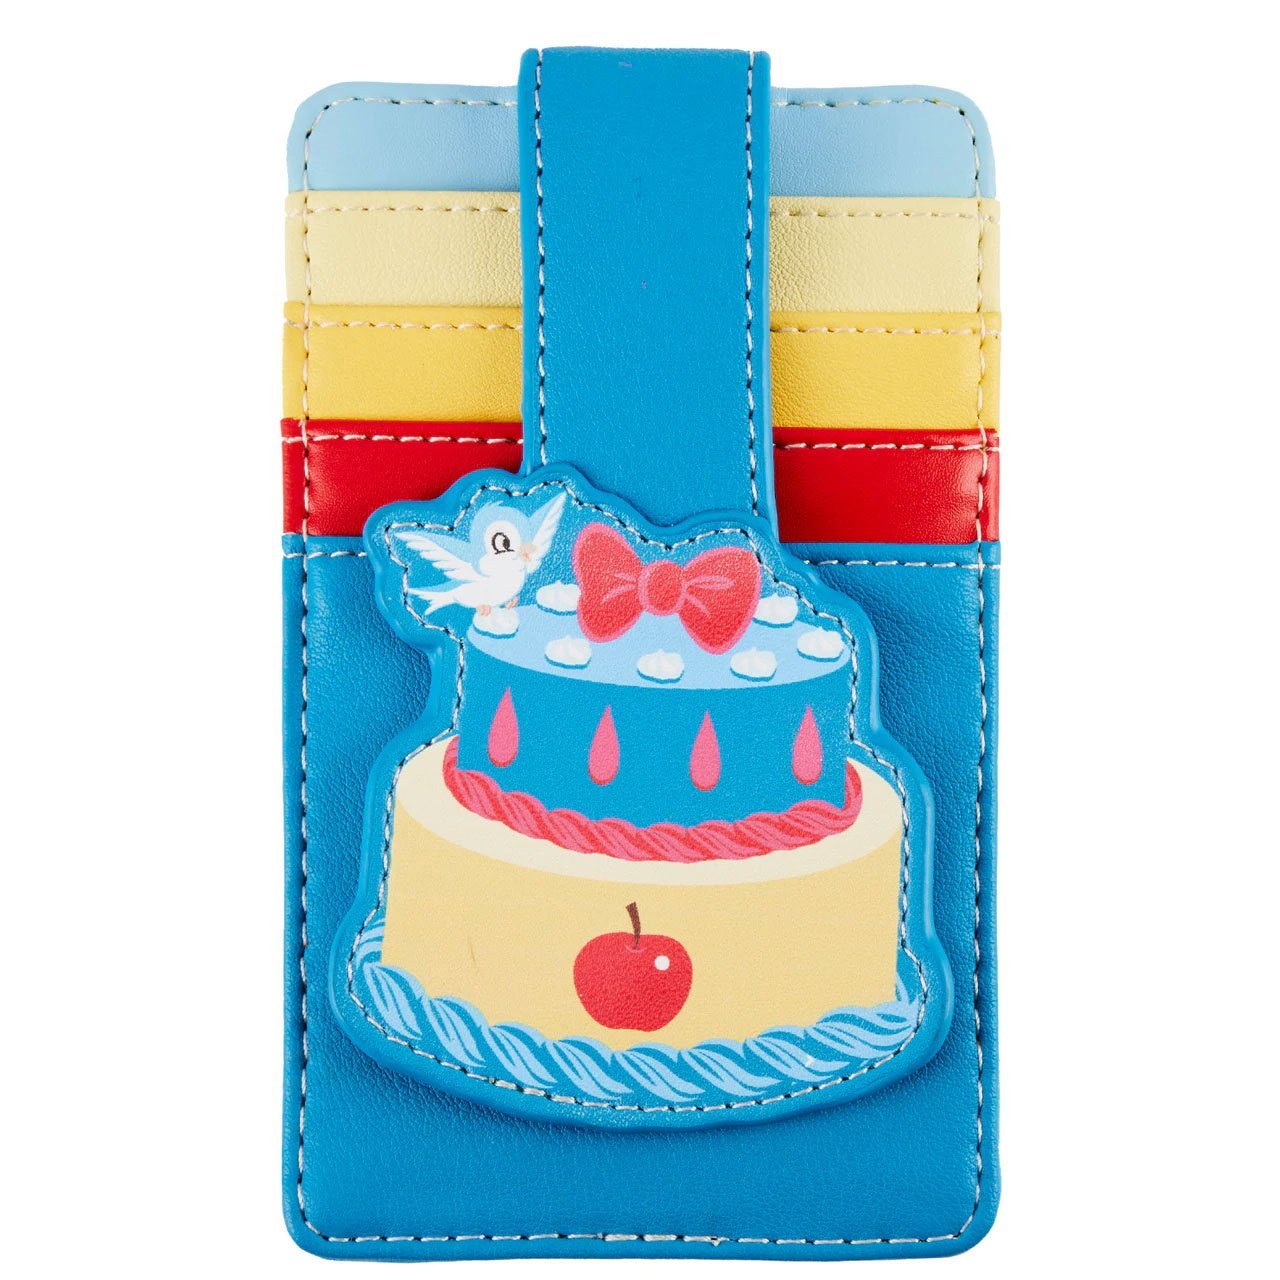 Loungefly x Disney Snow White Cake Cardholder - GeekCore